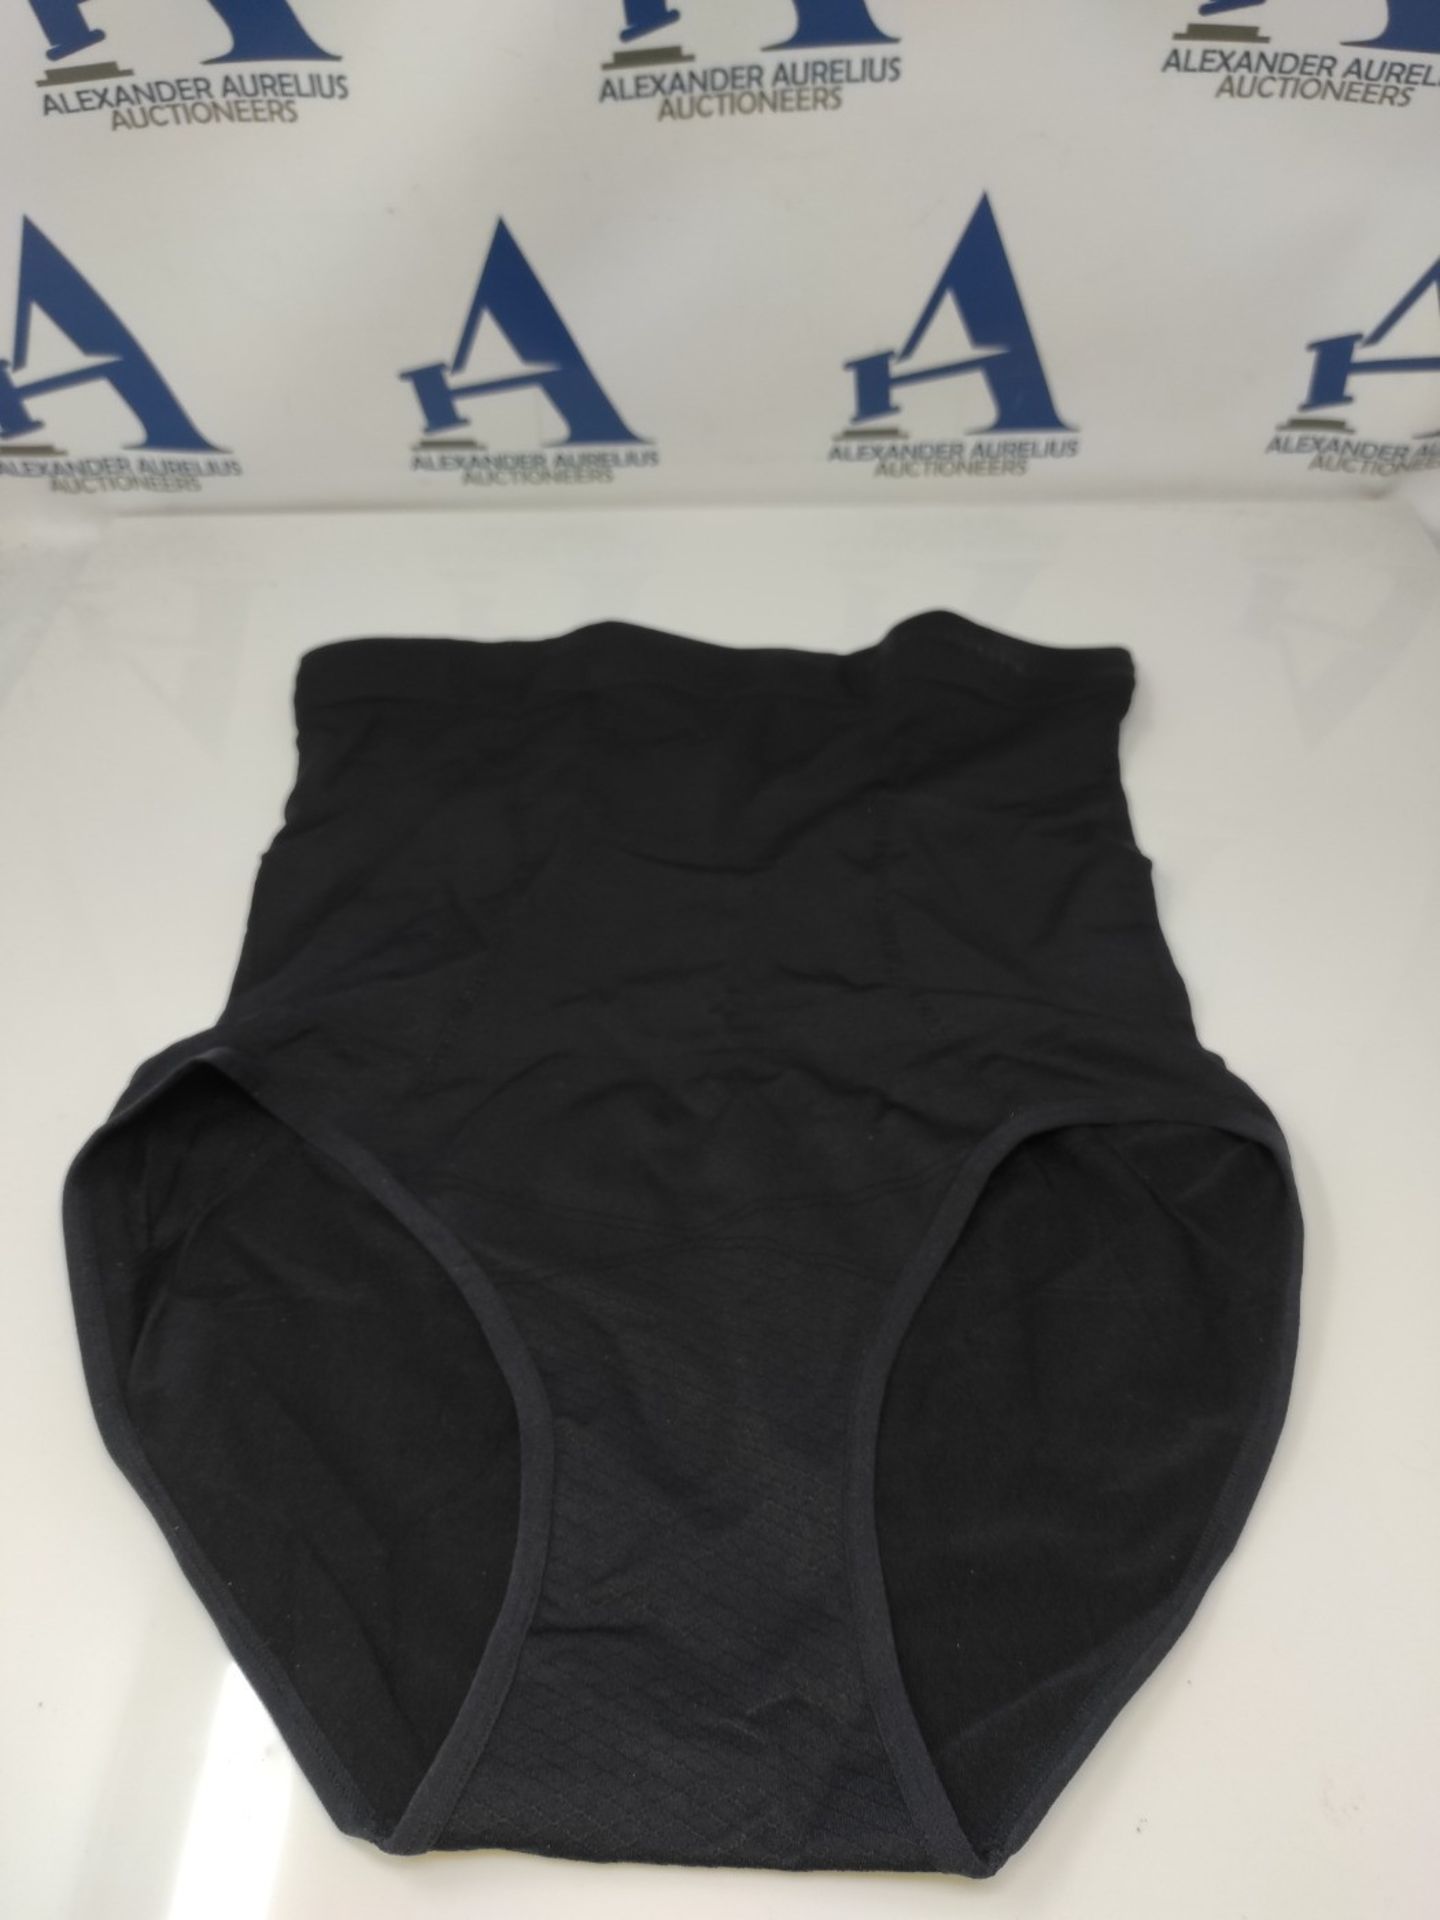 SANS COMPLEXE Women's Shaping Panty Slimmer Uni, Black - Black, Size 44/46 (Manufactur - Image 2 of 3